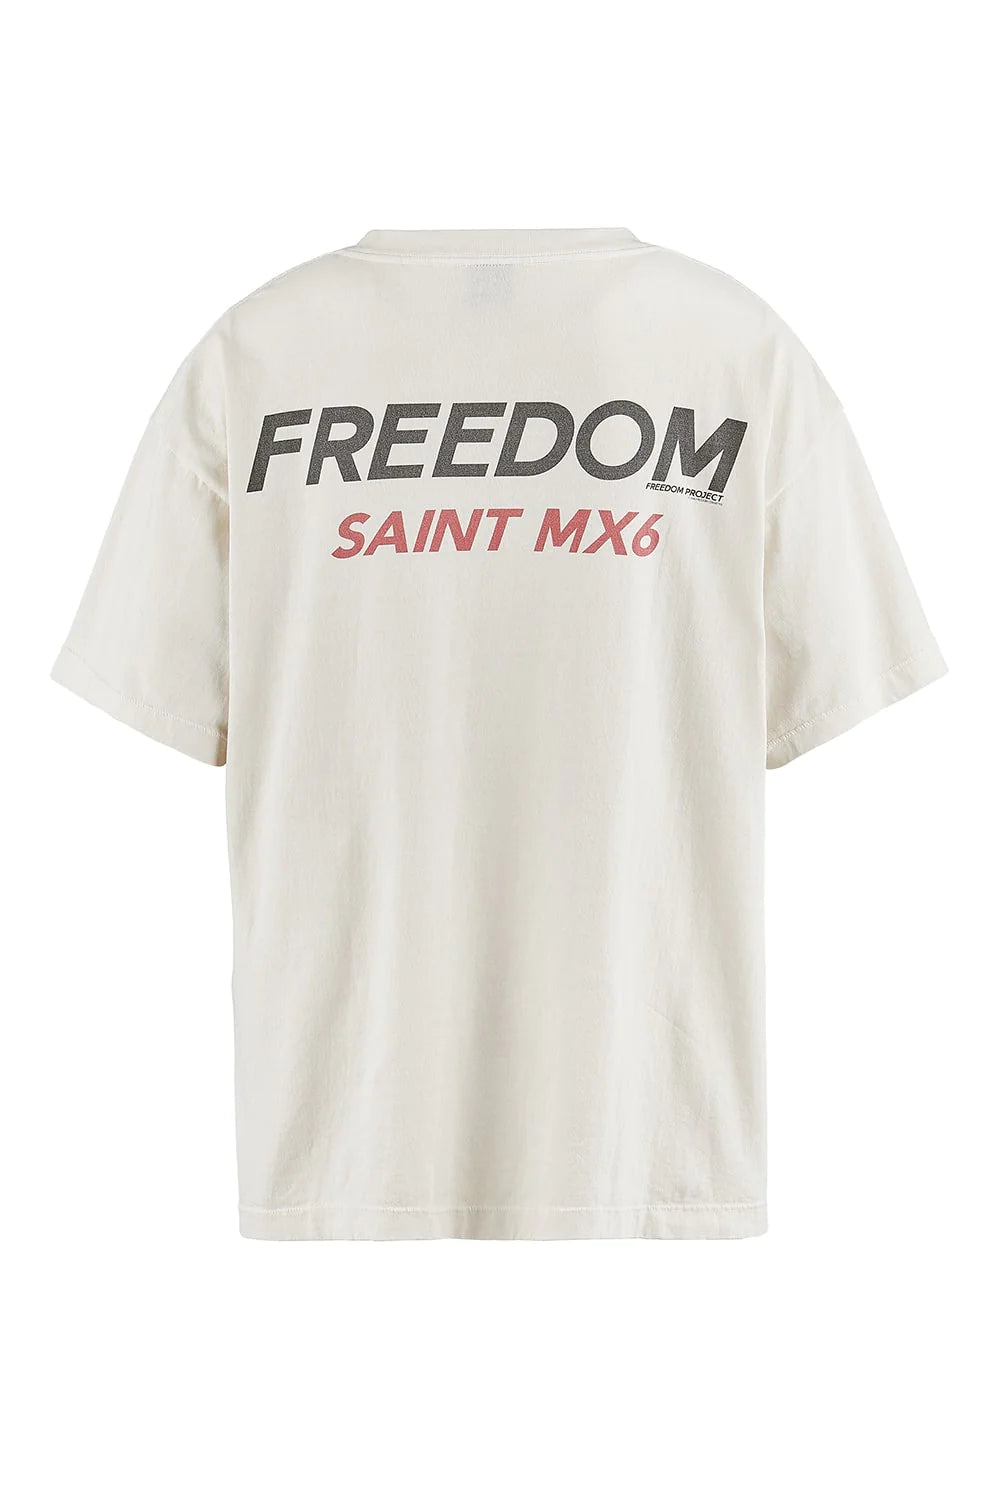 Saint Michael x Freedom Bike White T-shirt